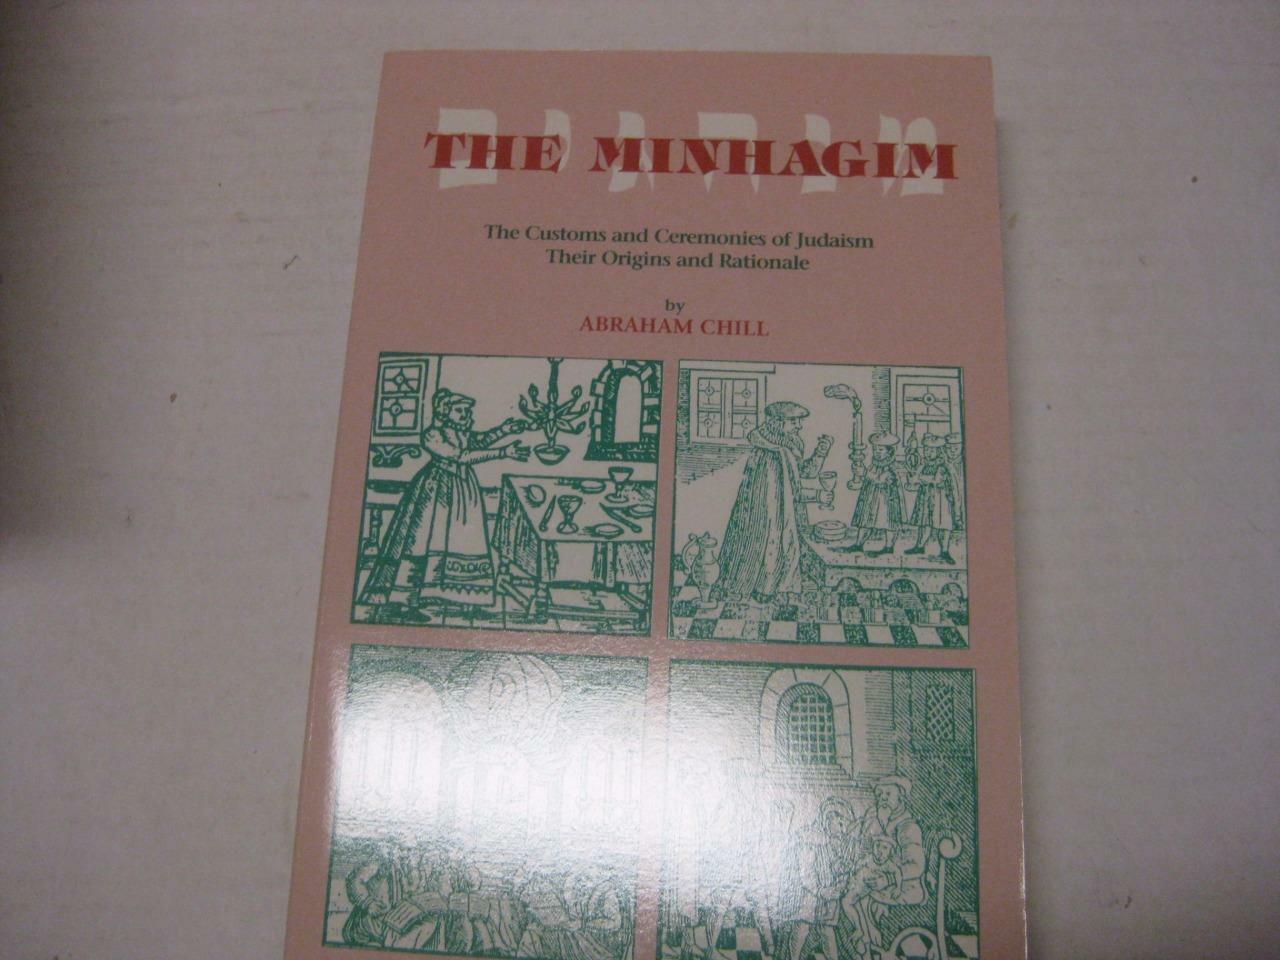 The Minhagim: The Customs and Ceremonies of Judaism Their Origins and Rationale